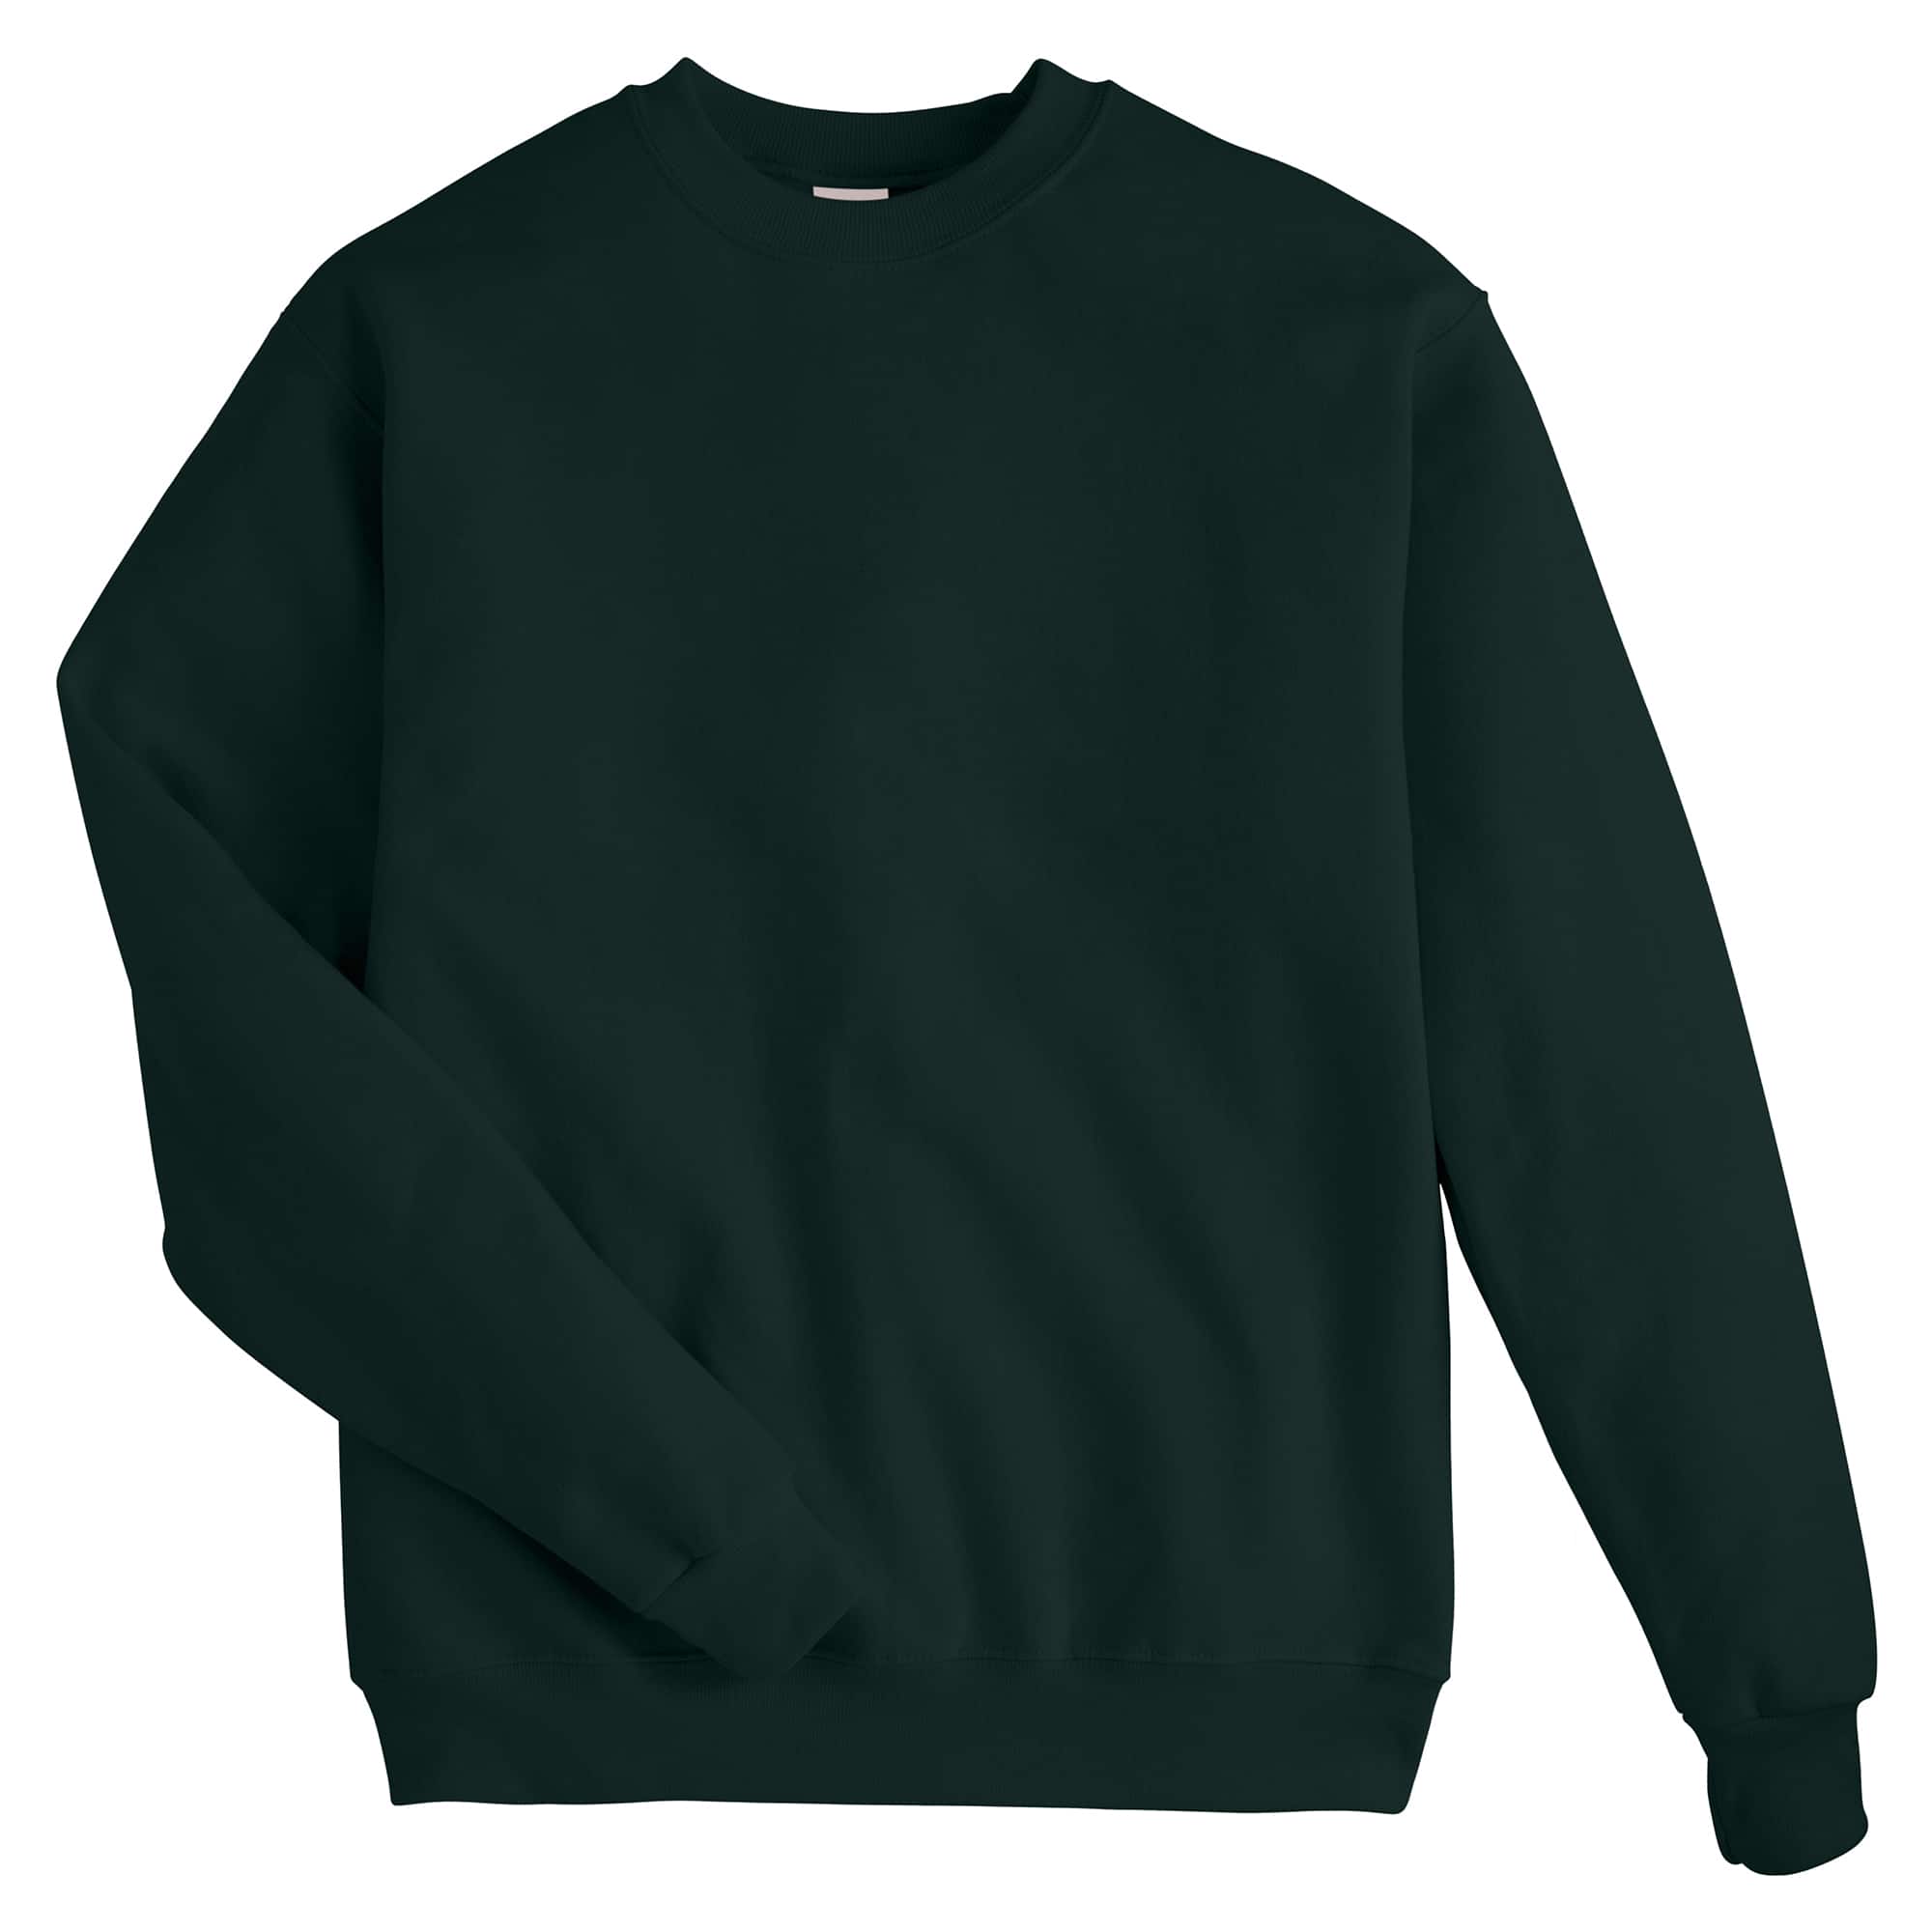 Radyan 14 Pack Long Sleeve (Ropa De Trabajo) Safety Green Construction  T-Shirts for Men, Medium, Green 